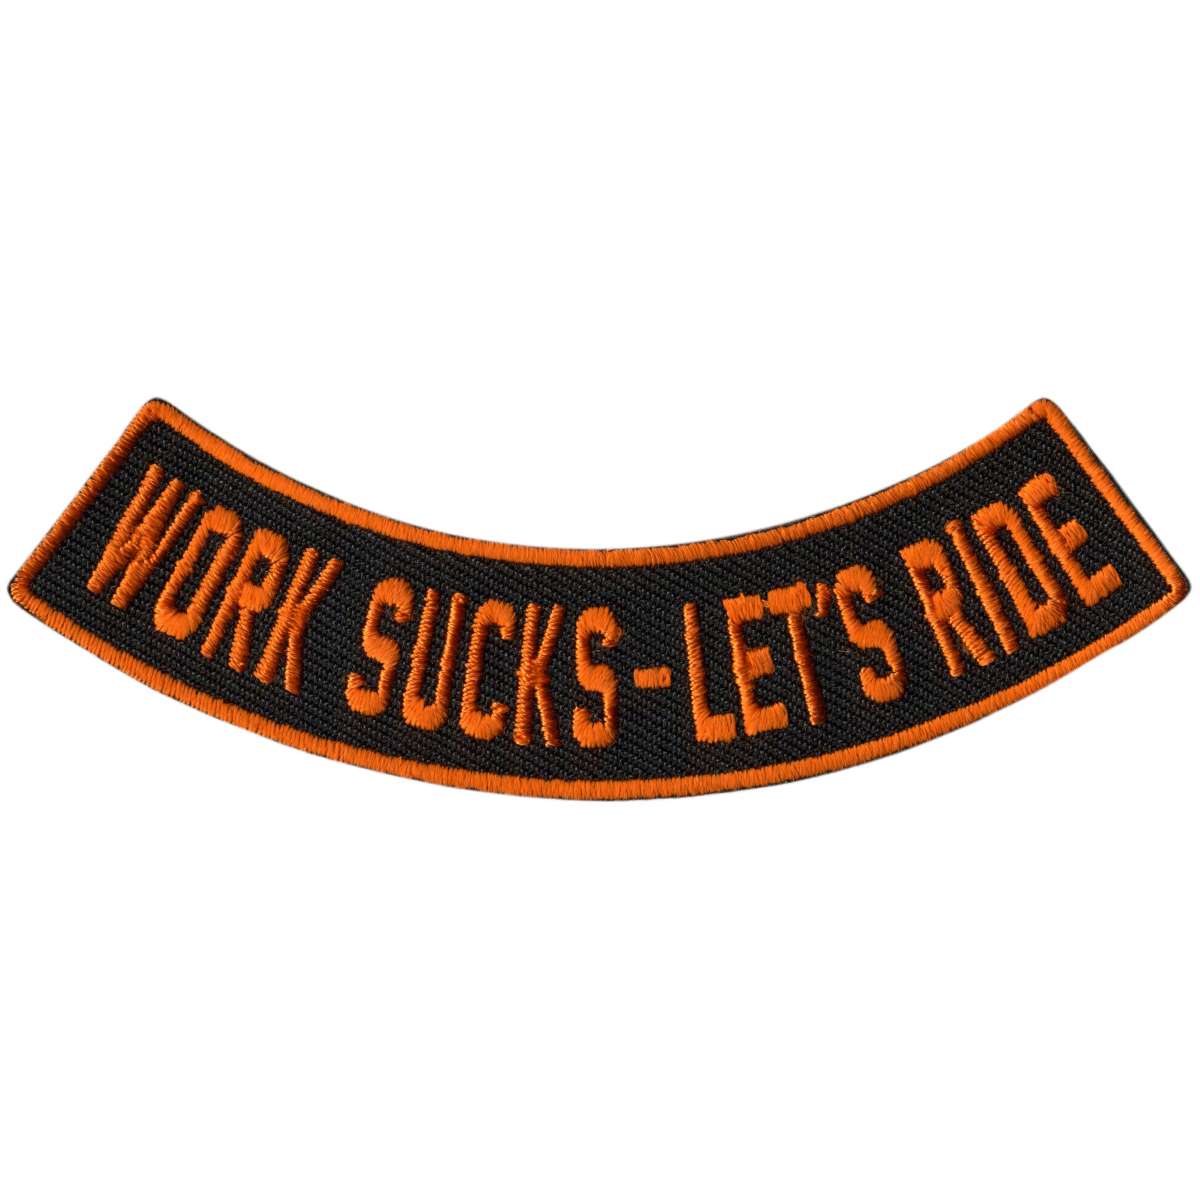 Hot Leathers Work Sucks - Let's Ride 4” X 1” Bottom Rocker Patch PPM5214